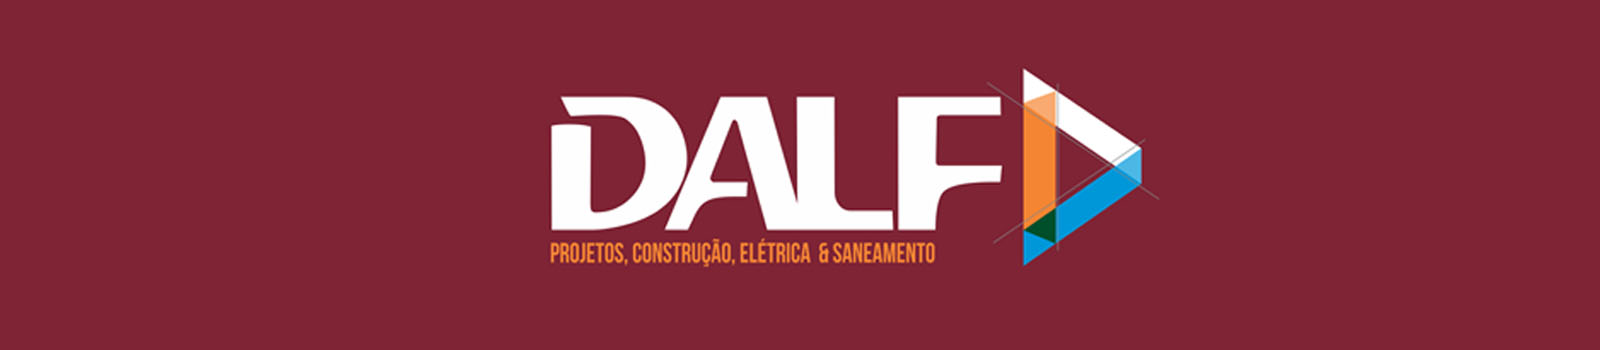 Dalf Projetos